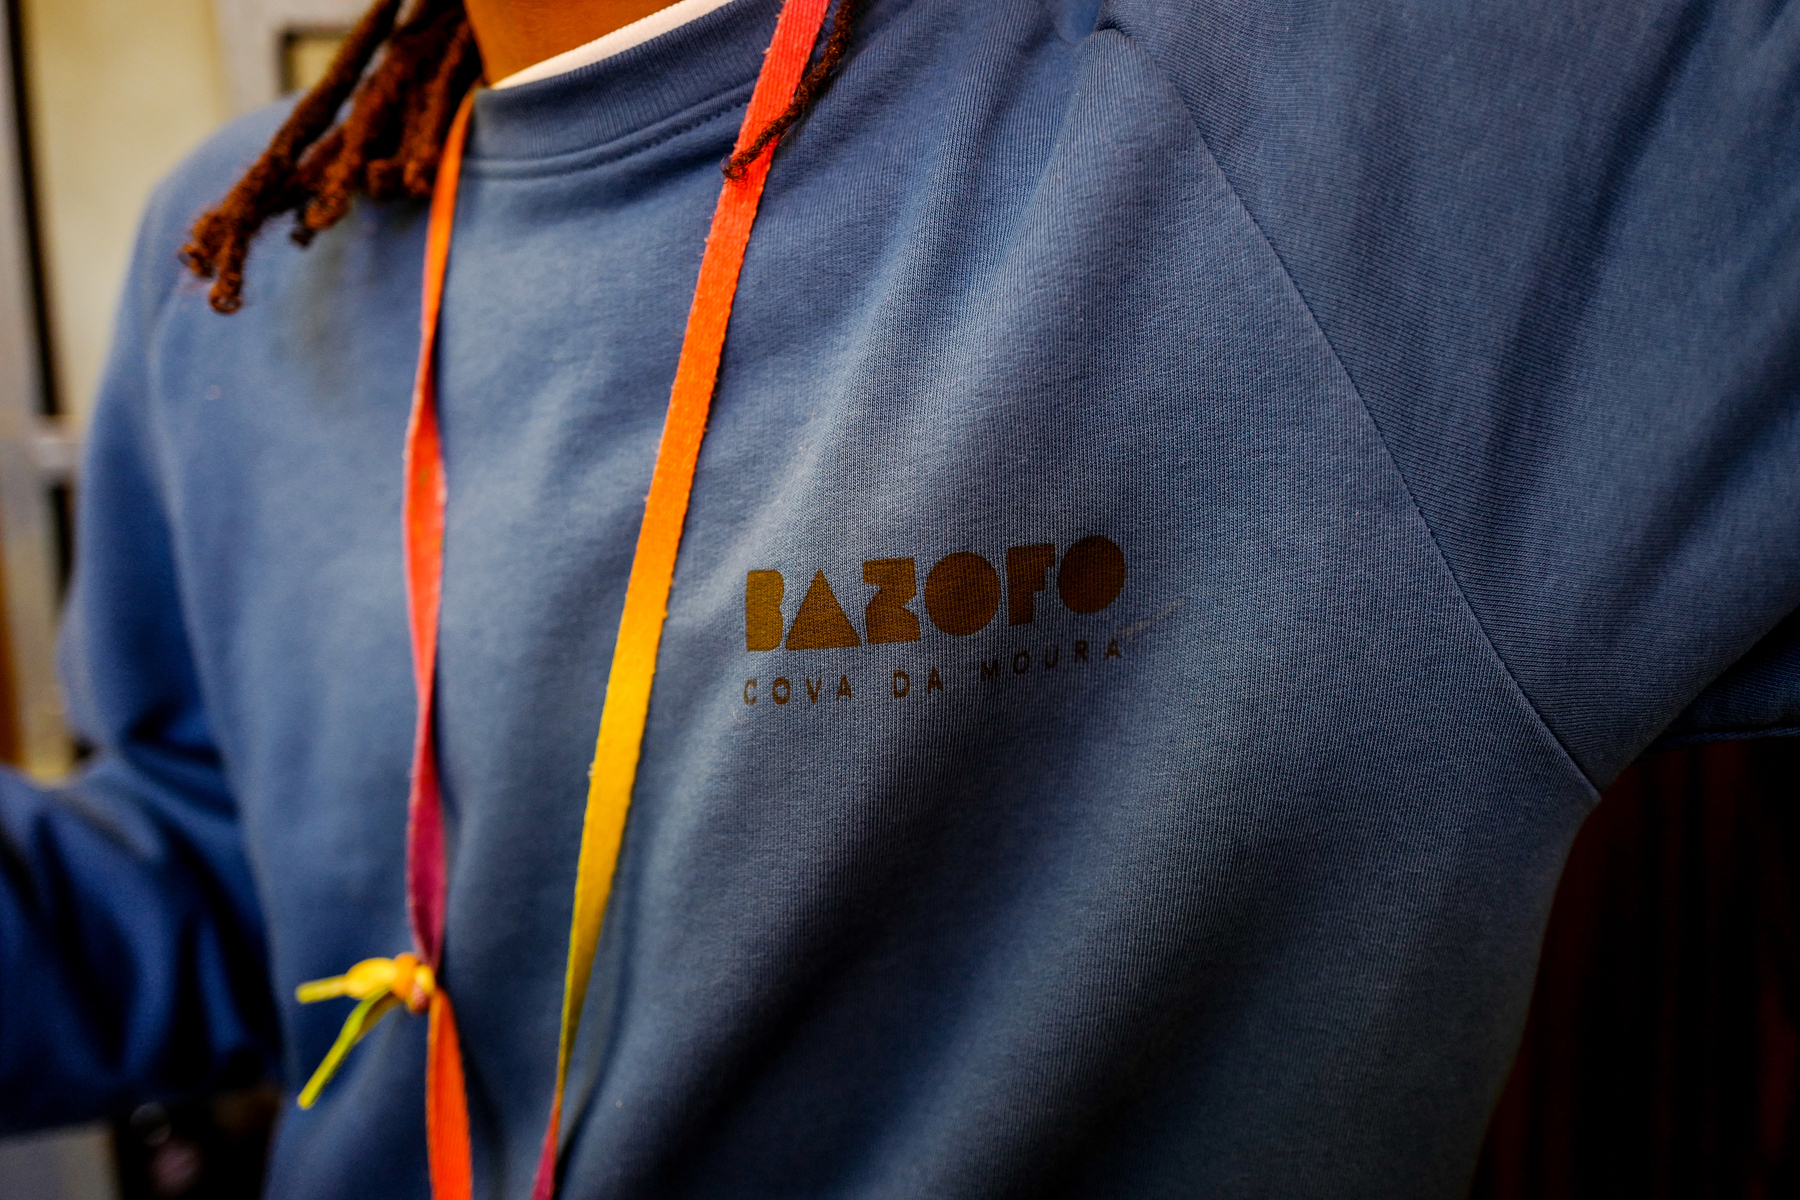 Closeup of a sweatshirt, you can read the brand “Bazofo”